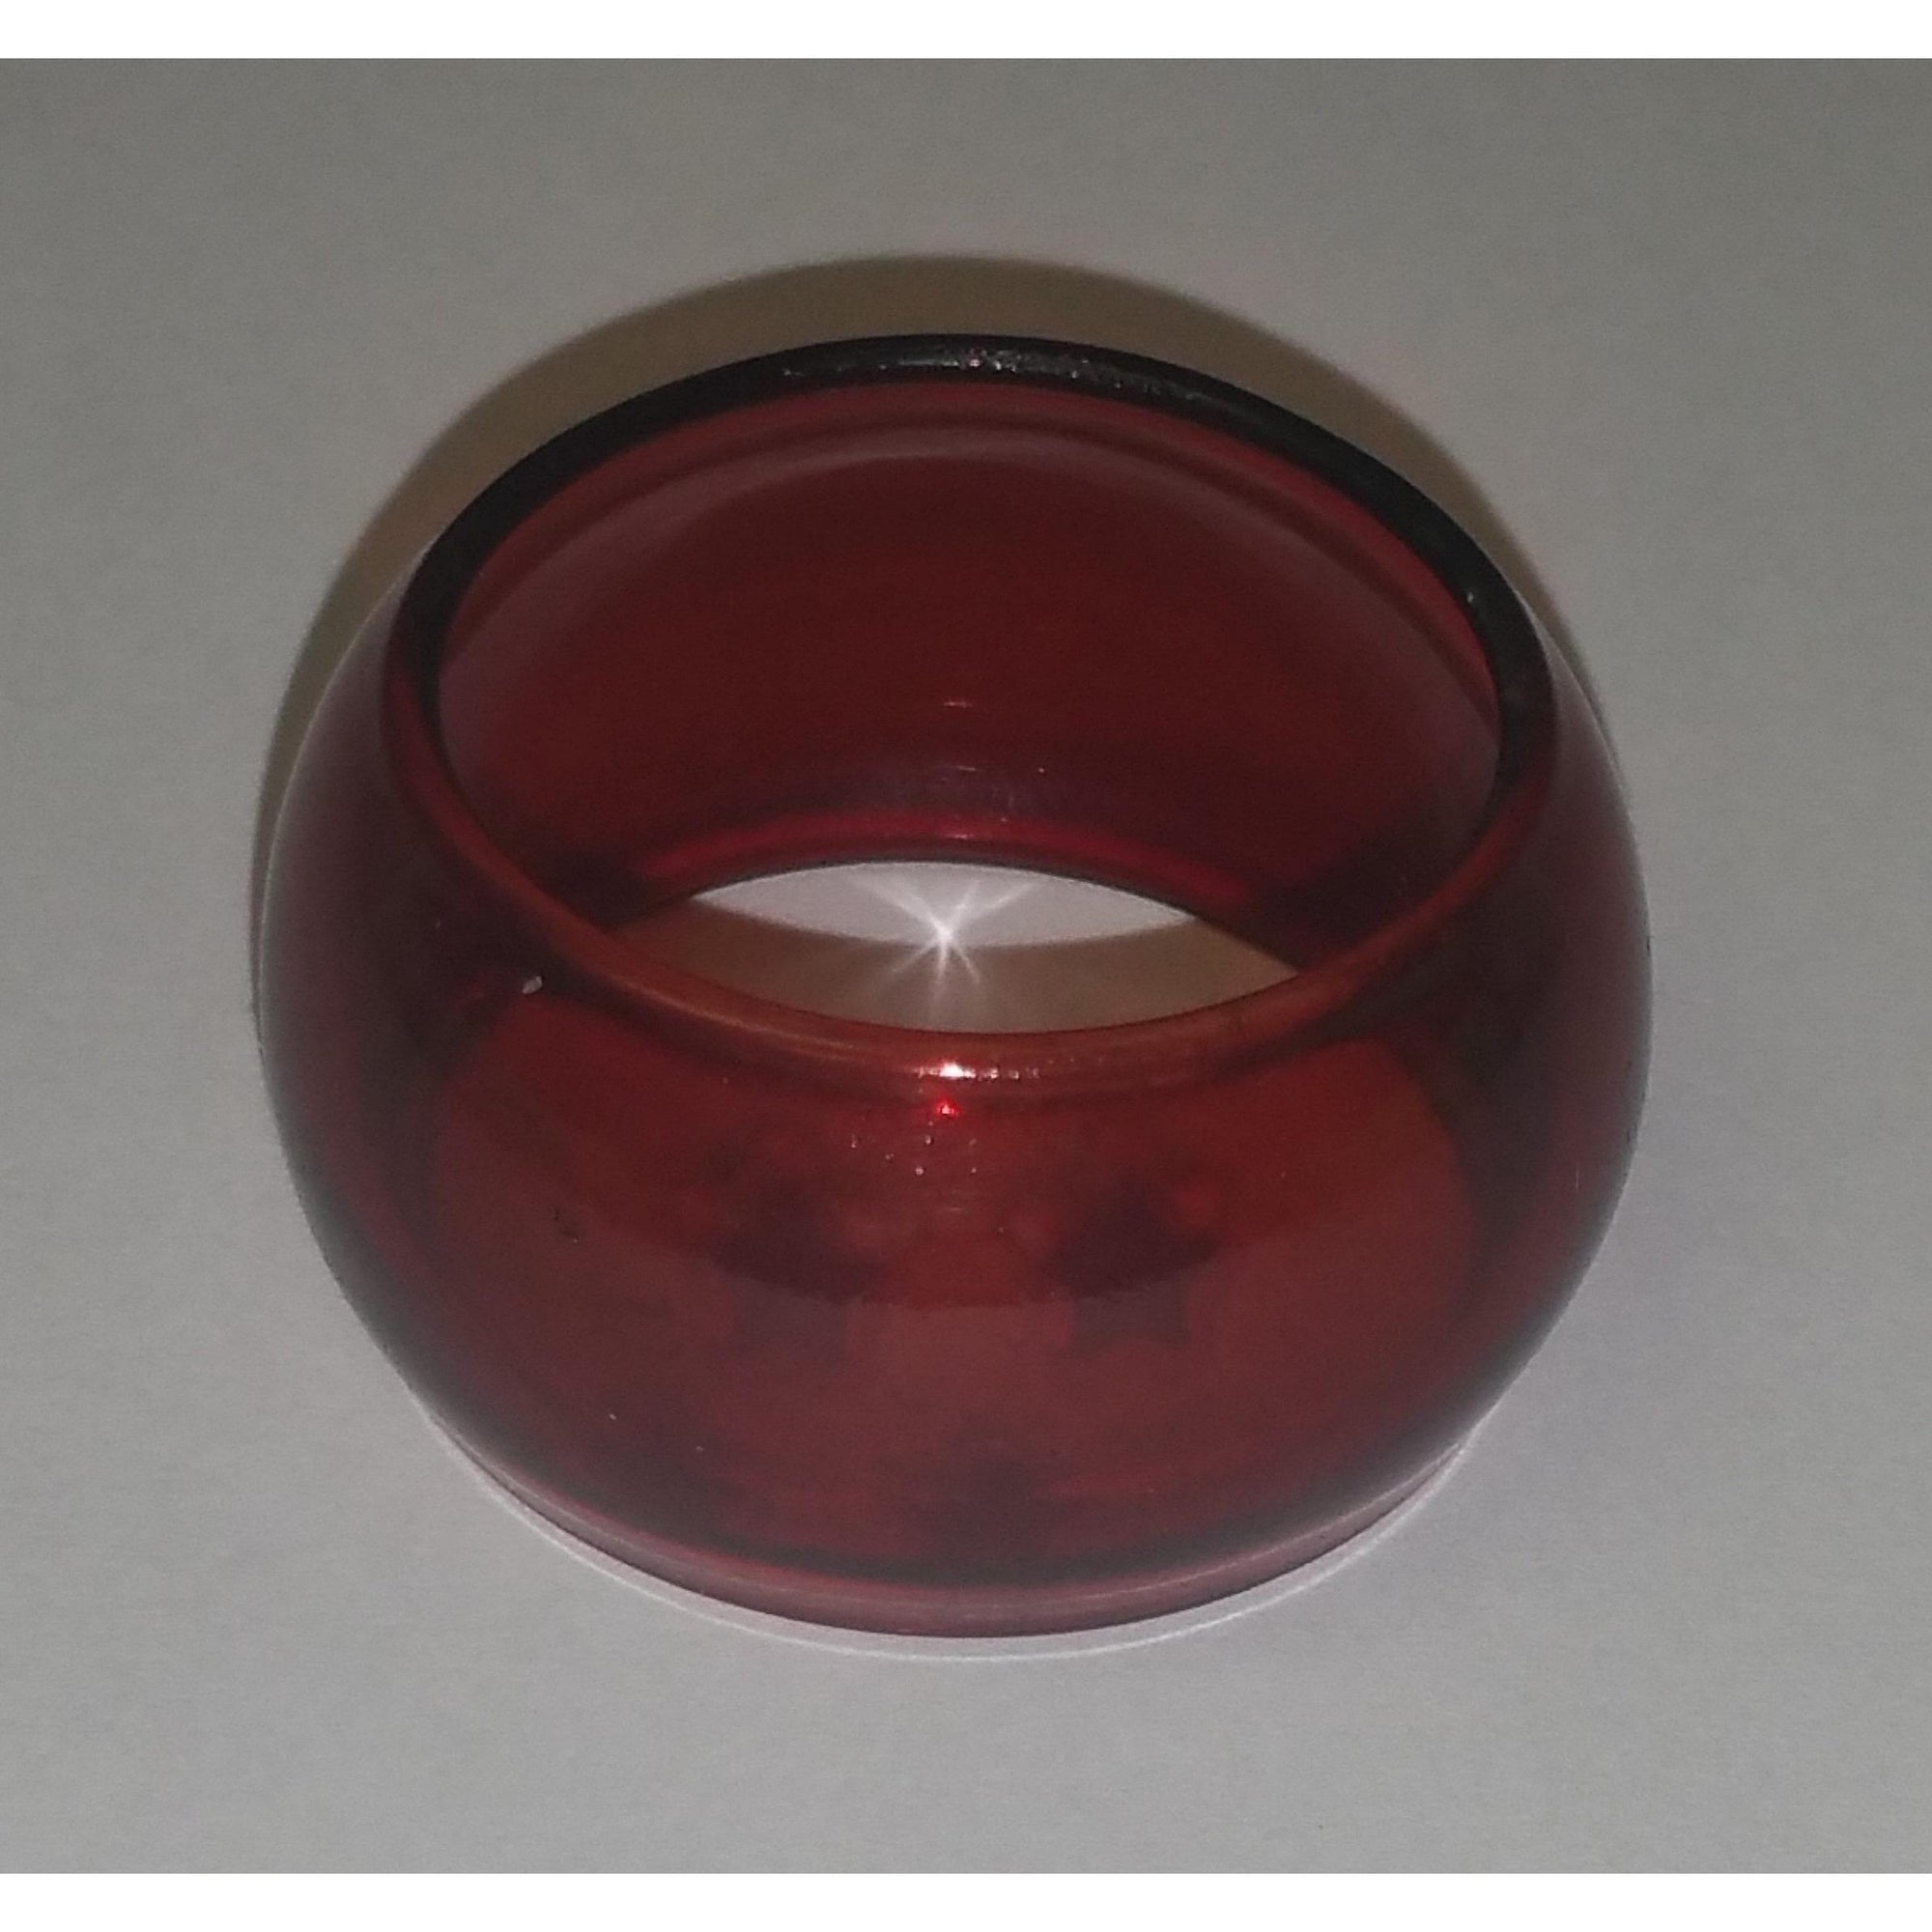 Fumytech Dragon Ball RDTA Atomizer Replacement Glass Red Glass